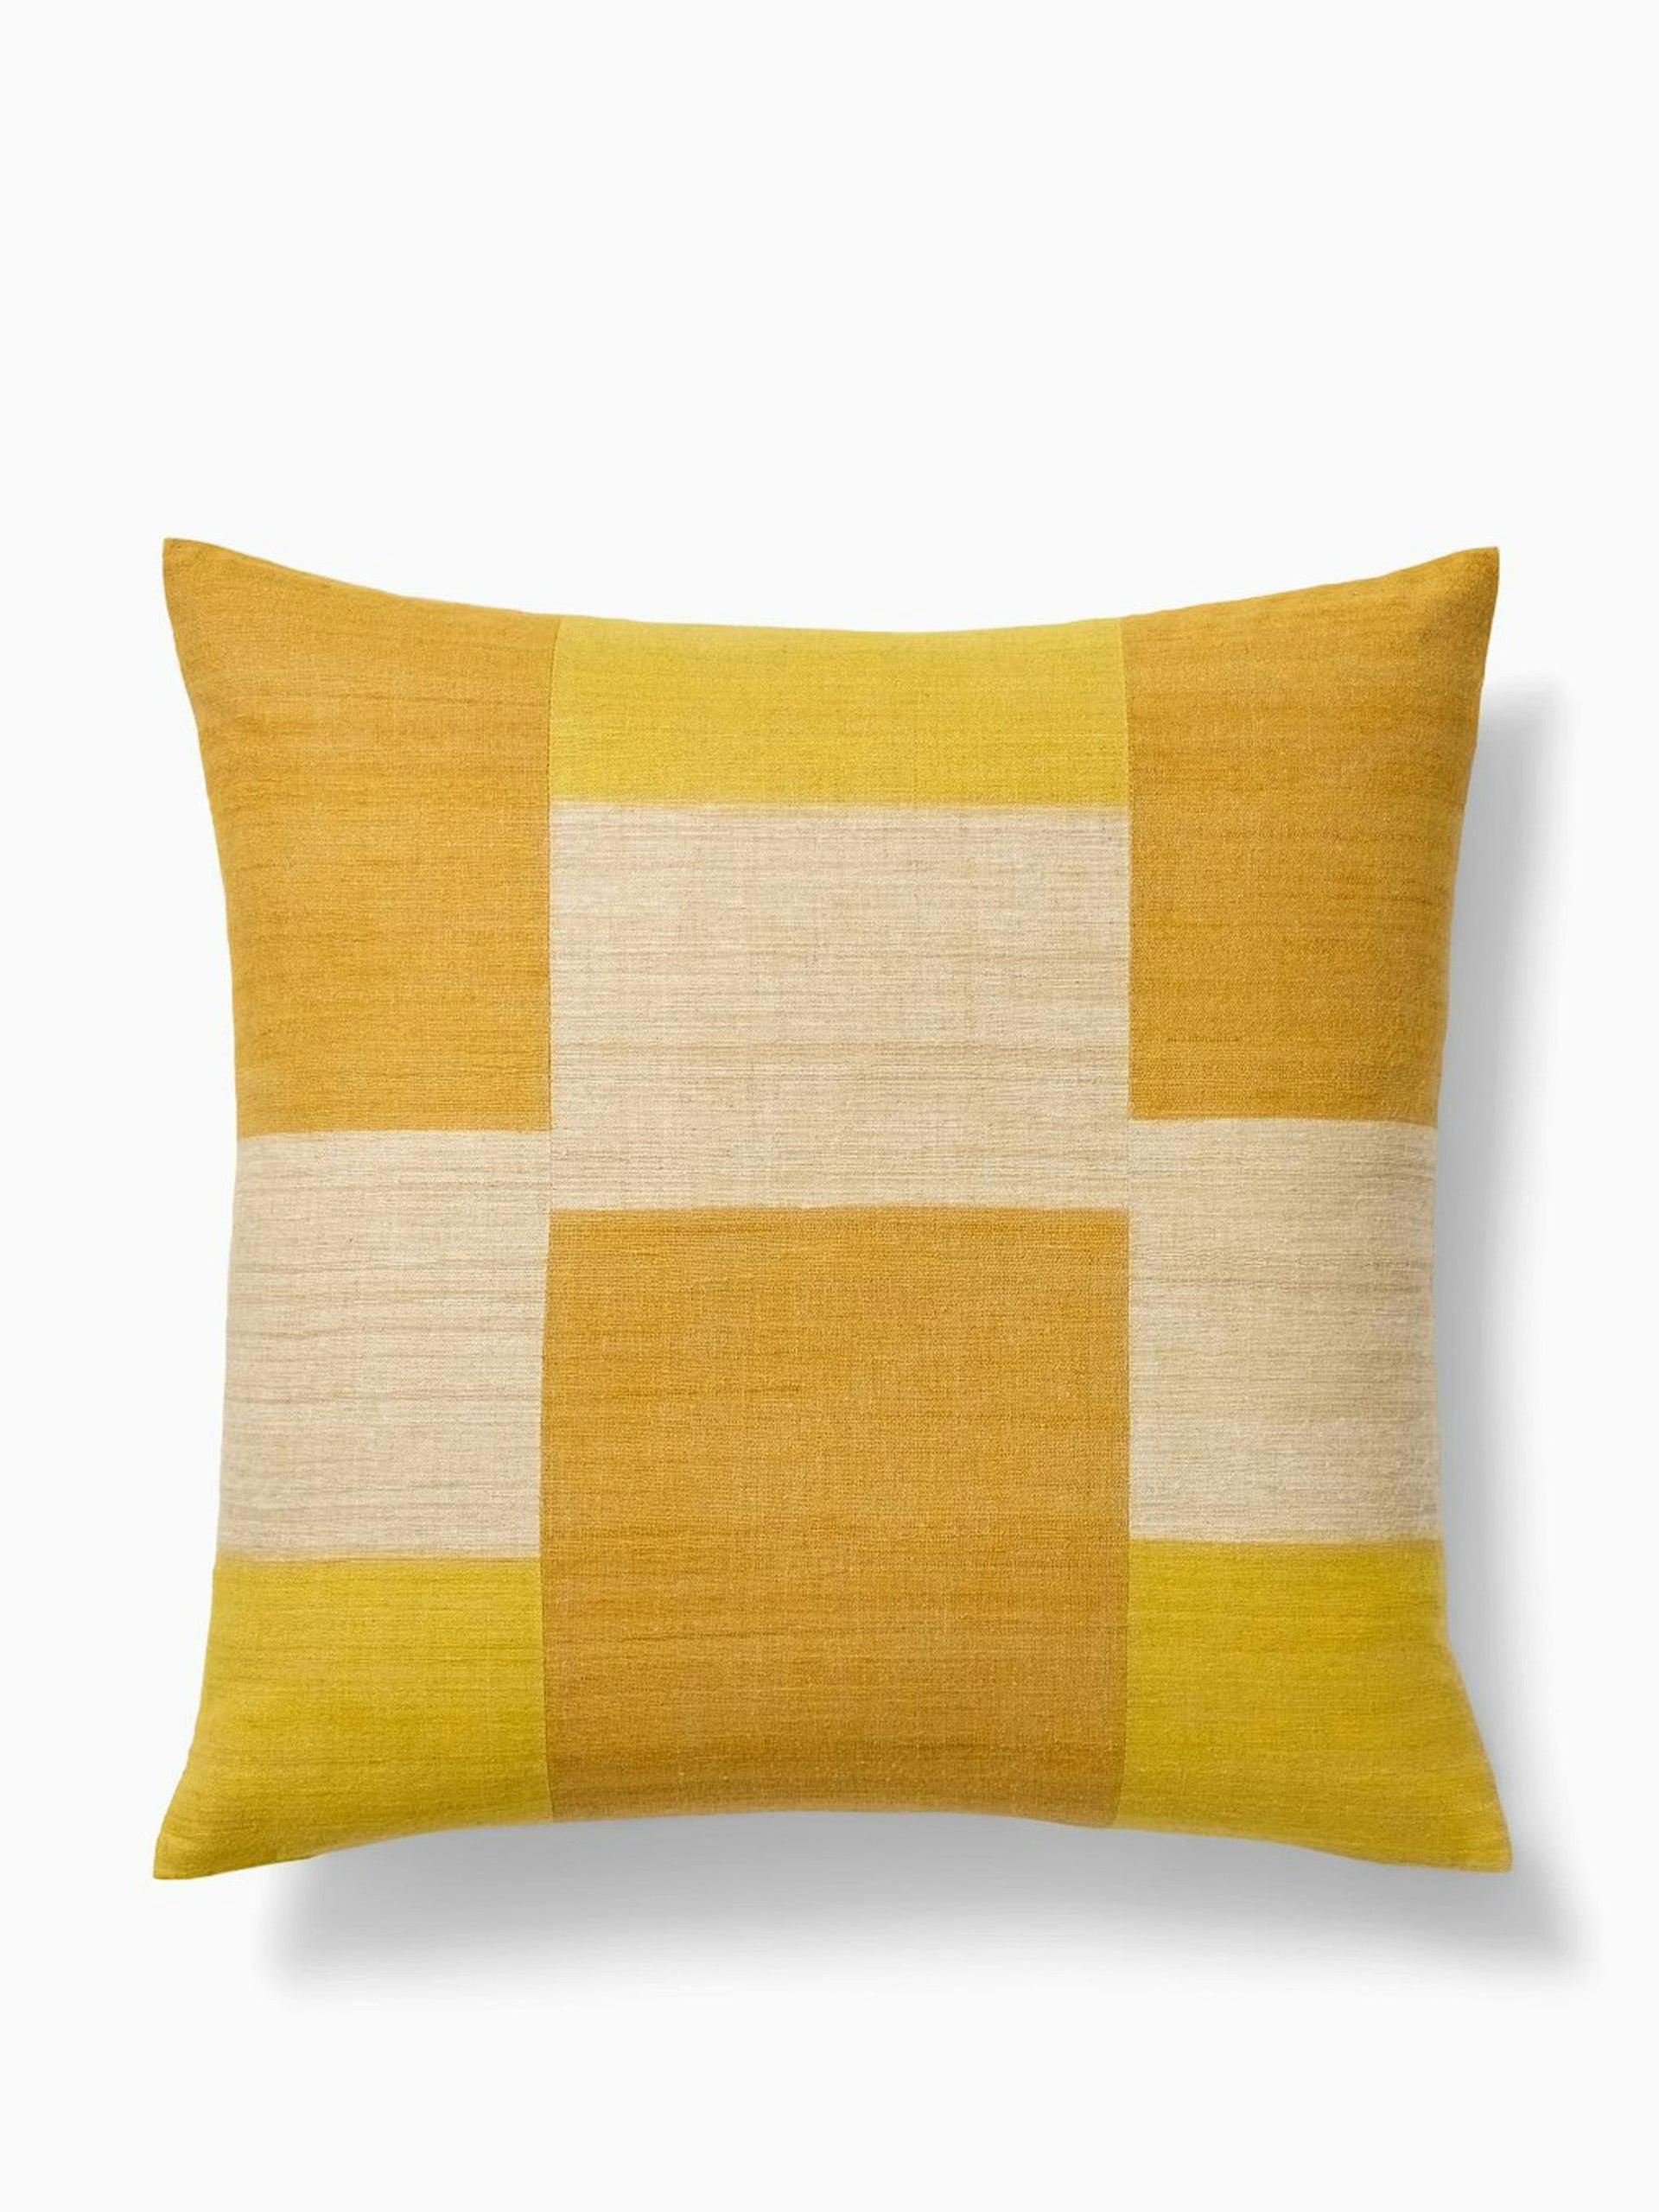 Tonal silk patchwork yellow cushion cover